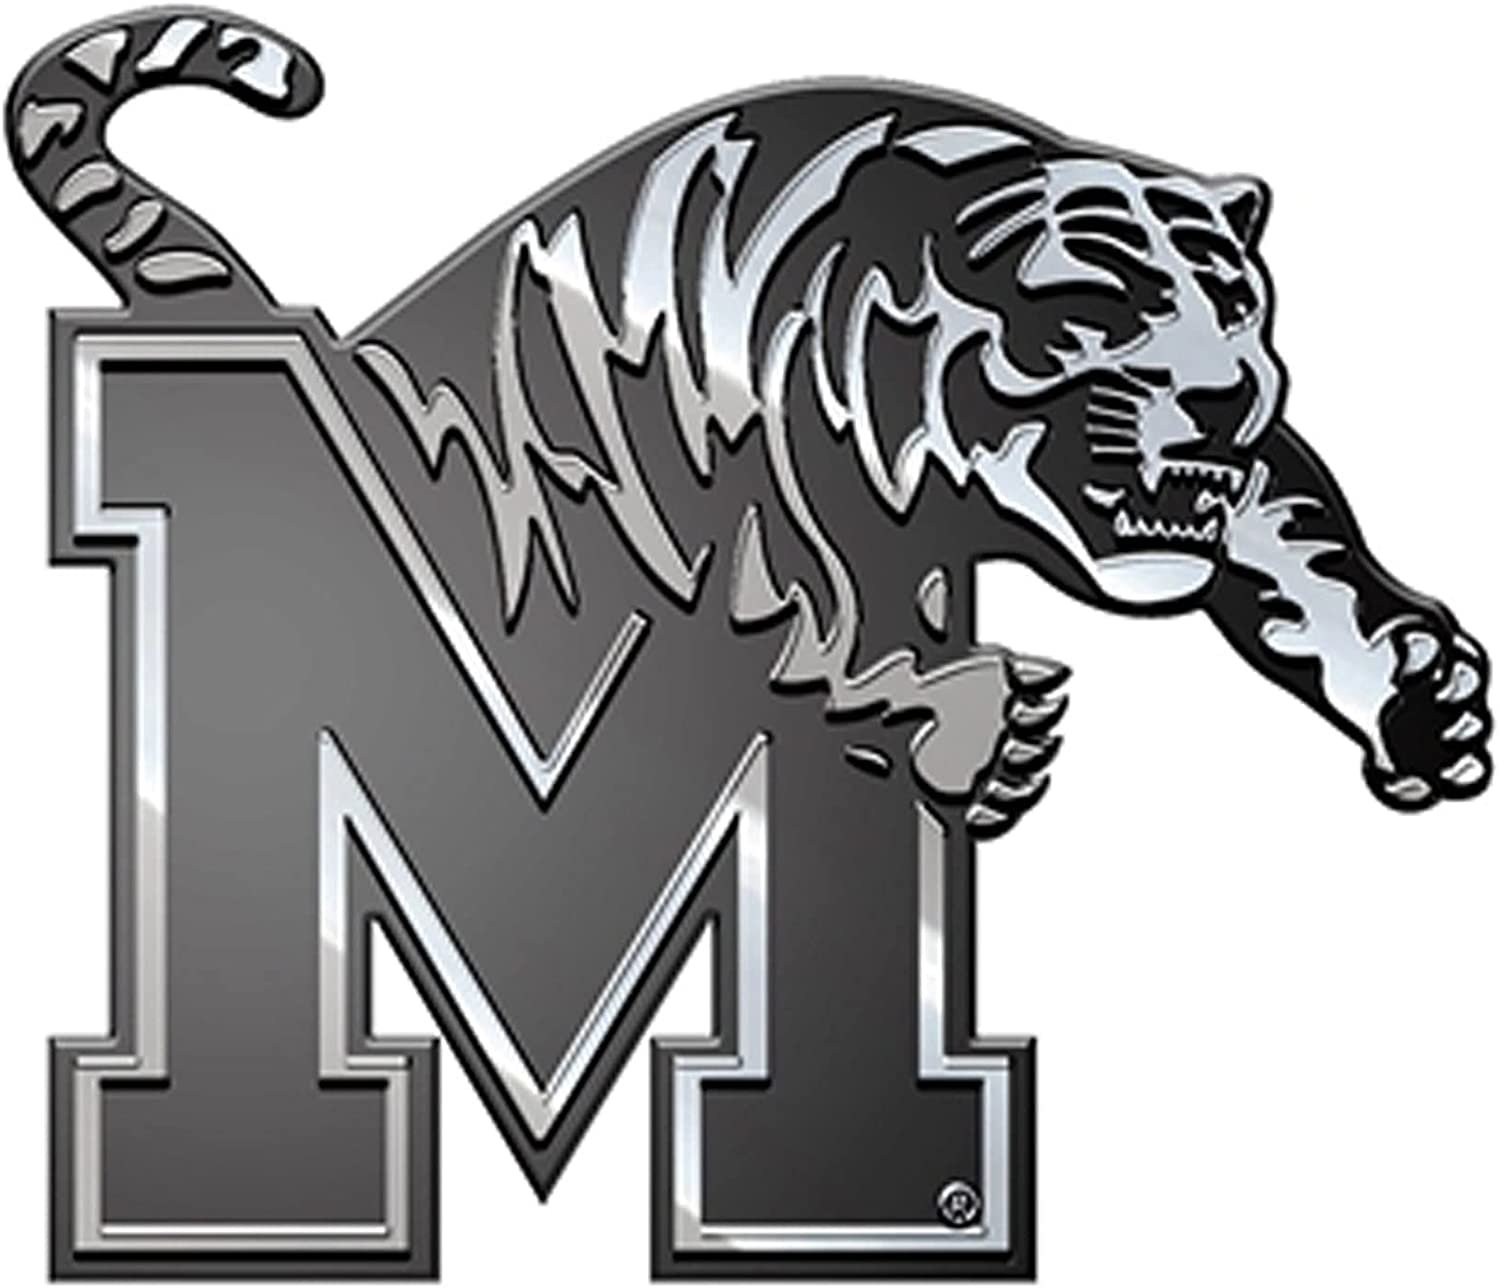 University of Memphis Tigers Auto Emblem, Plastic Molded, Silver Chrome Color, Raised 3D Effect, Adhesive Backing